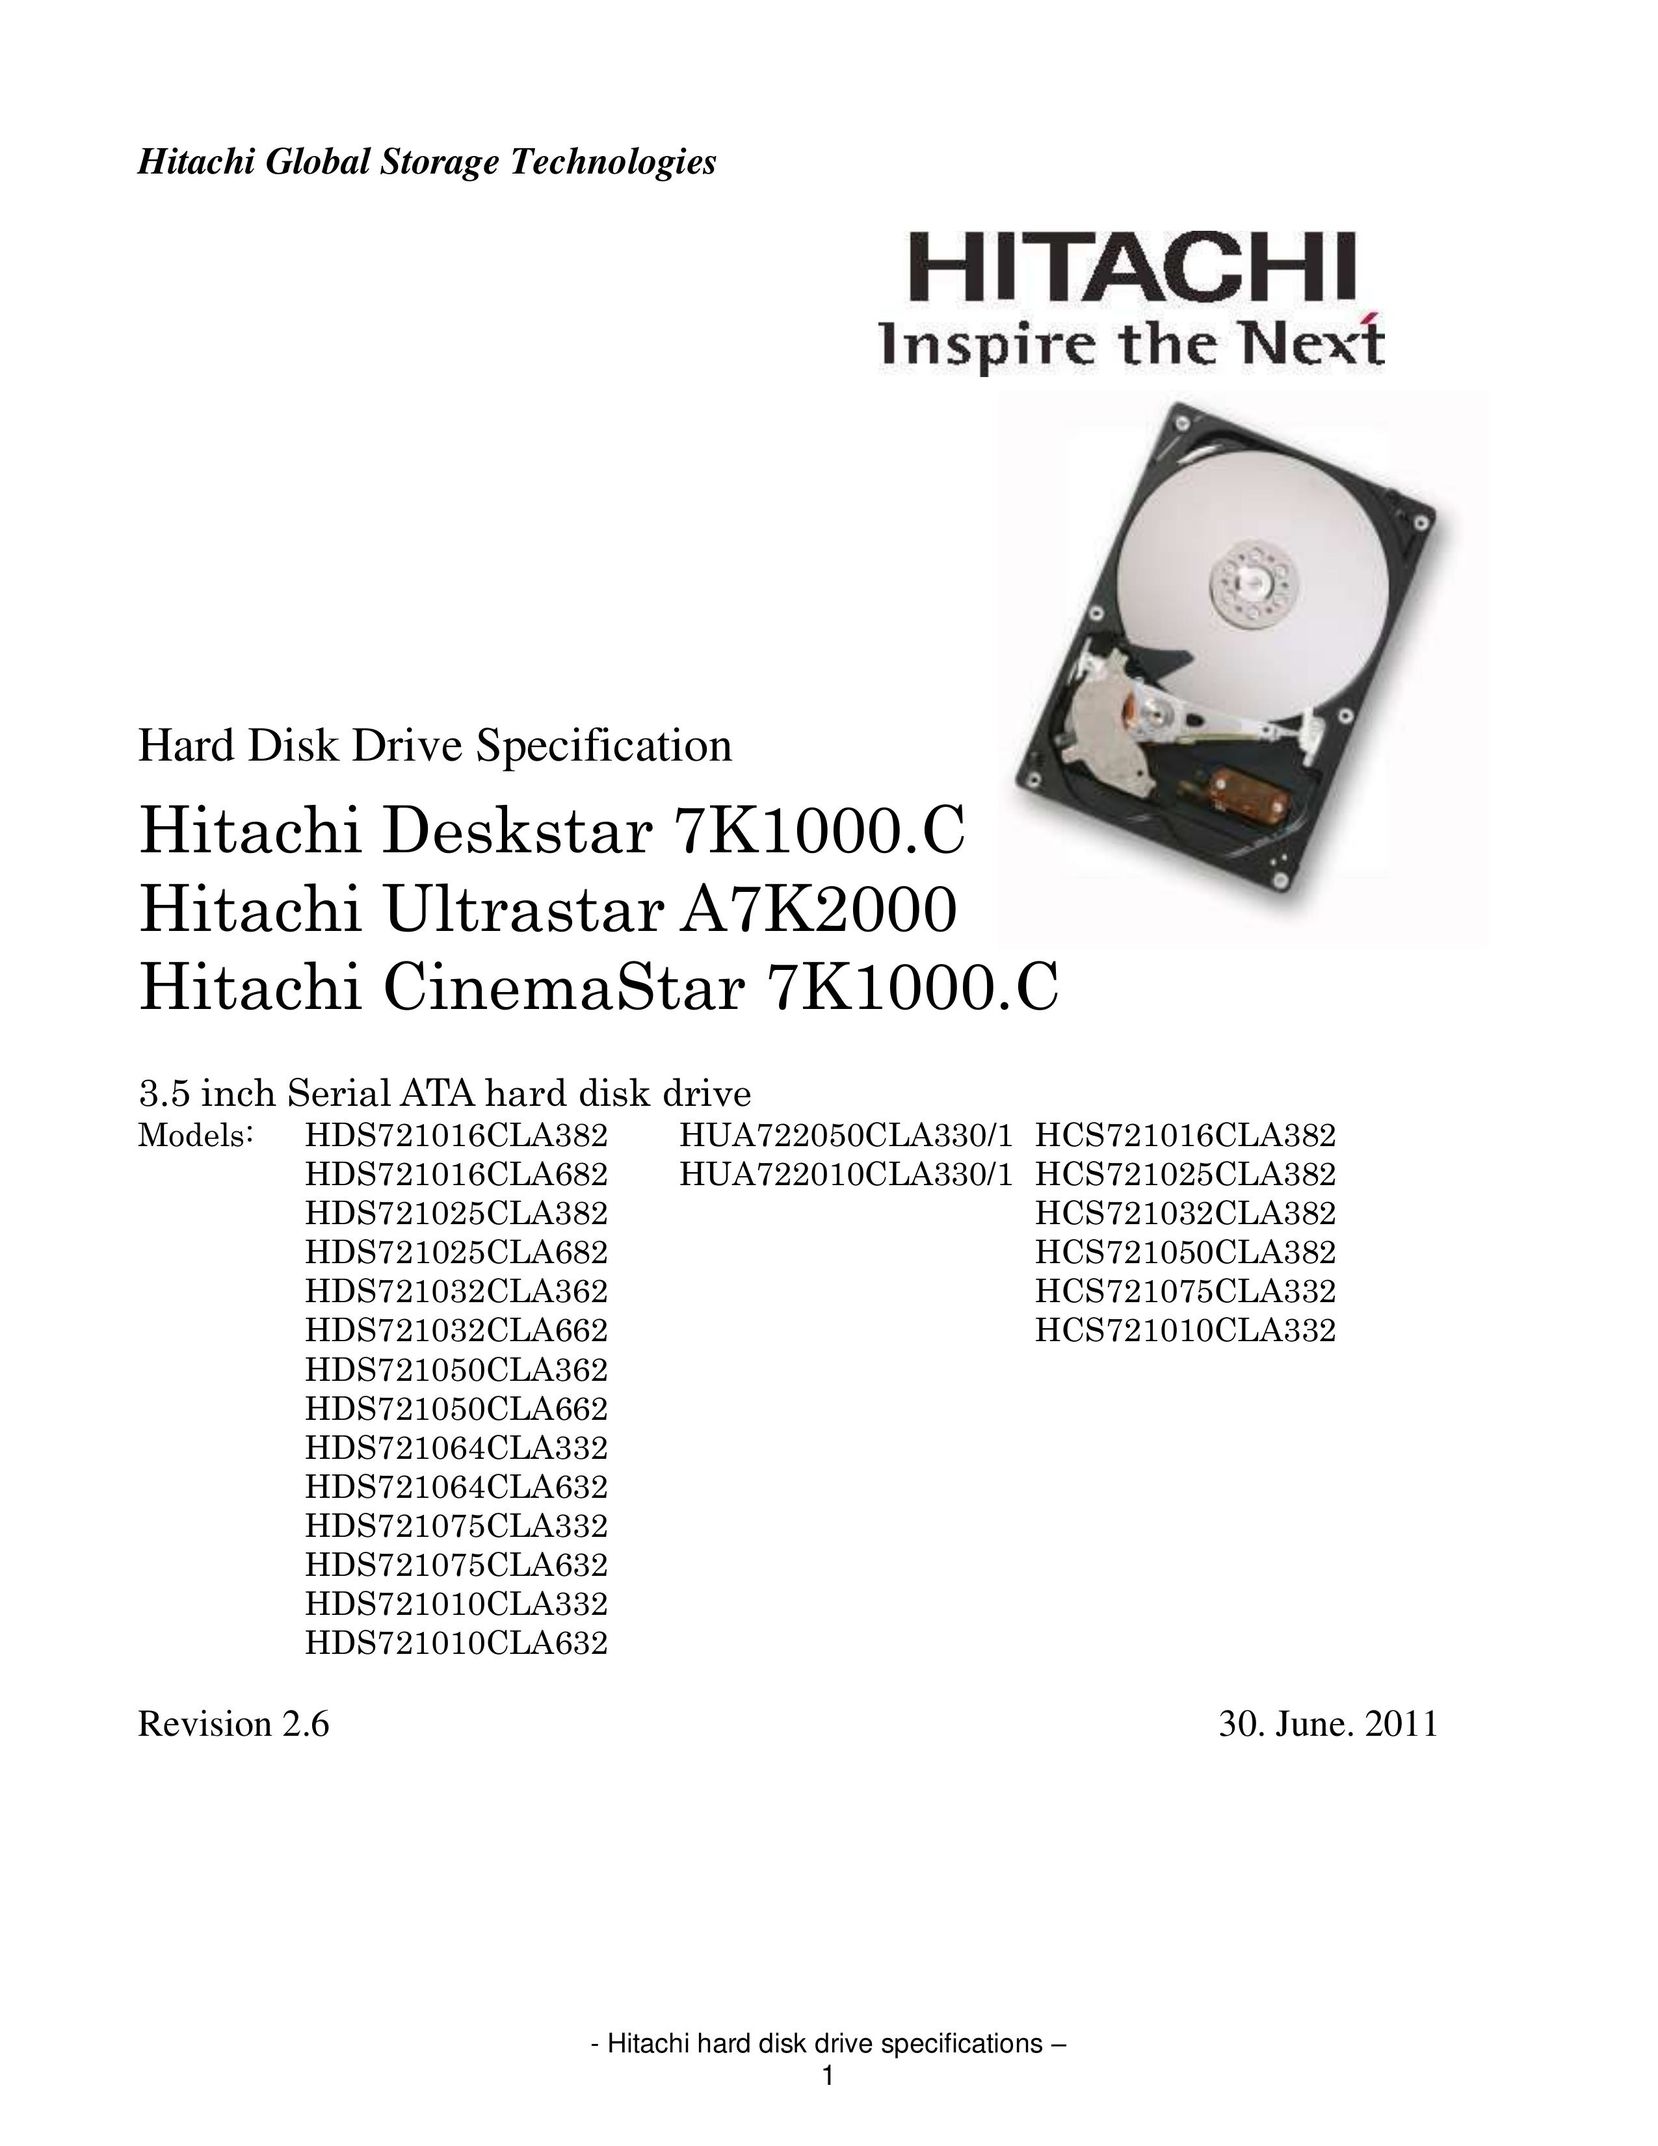 Hitachi HCS721010CLA332 Computer Drive User Manual